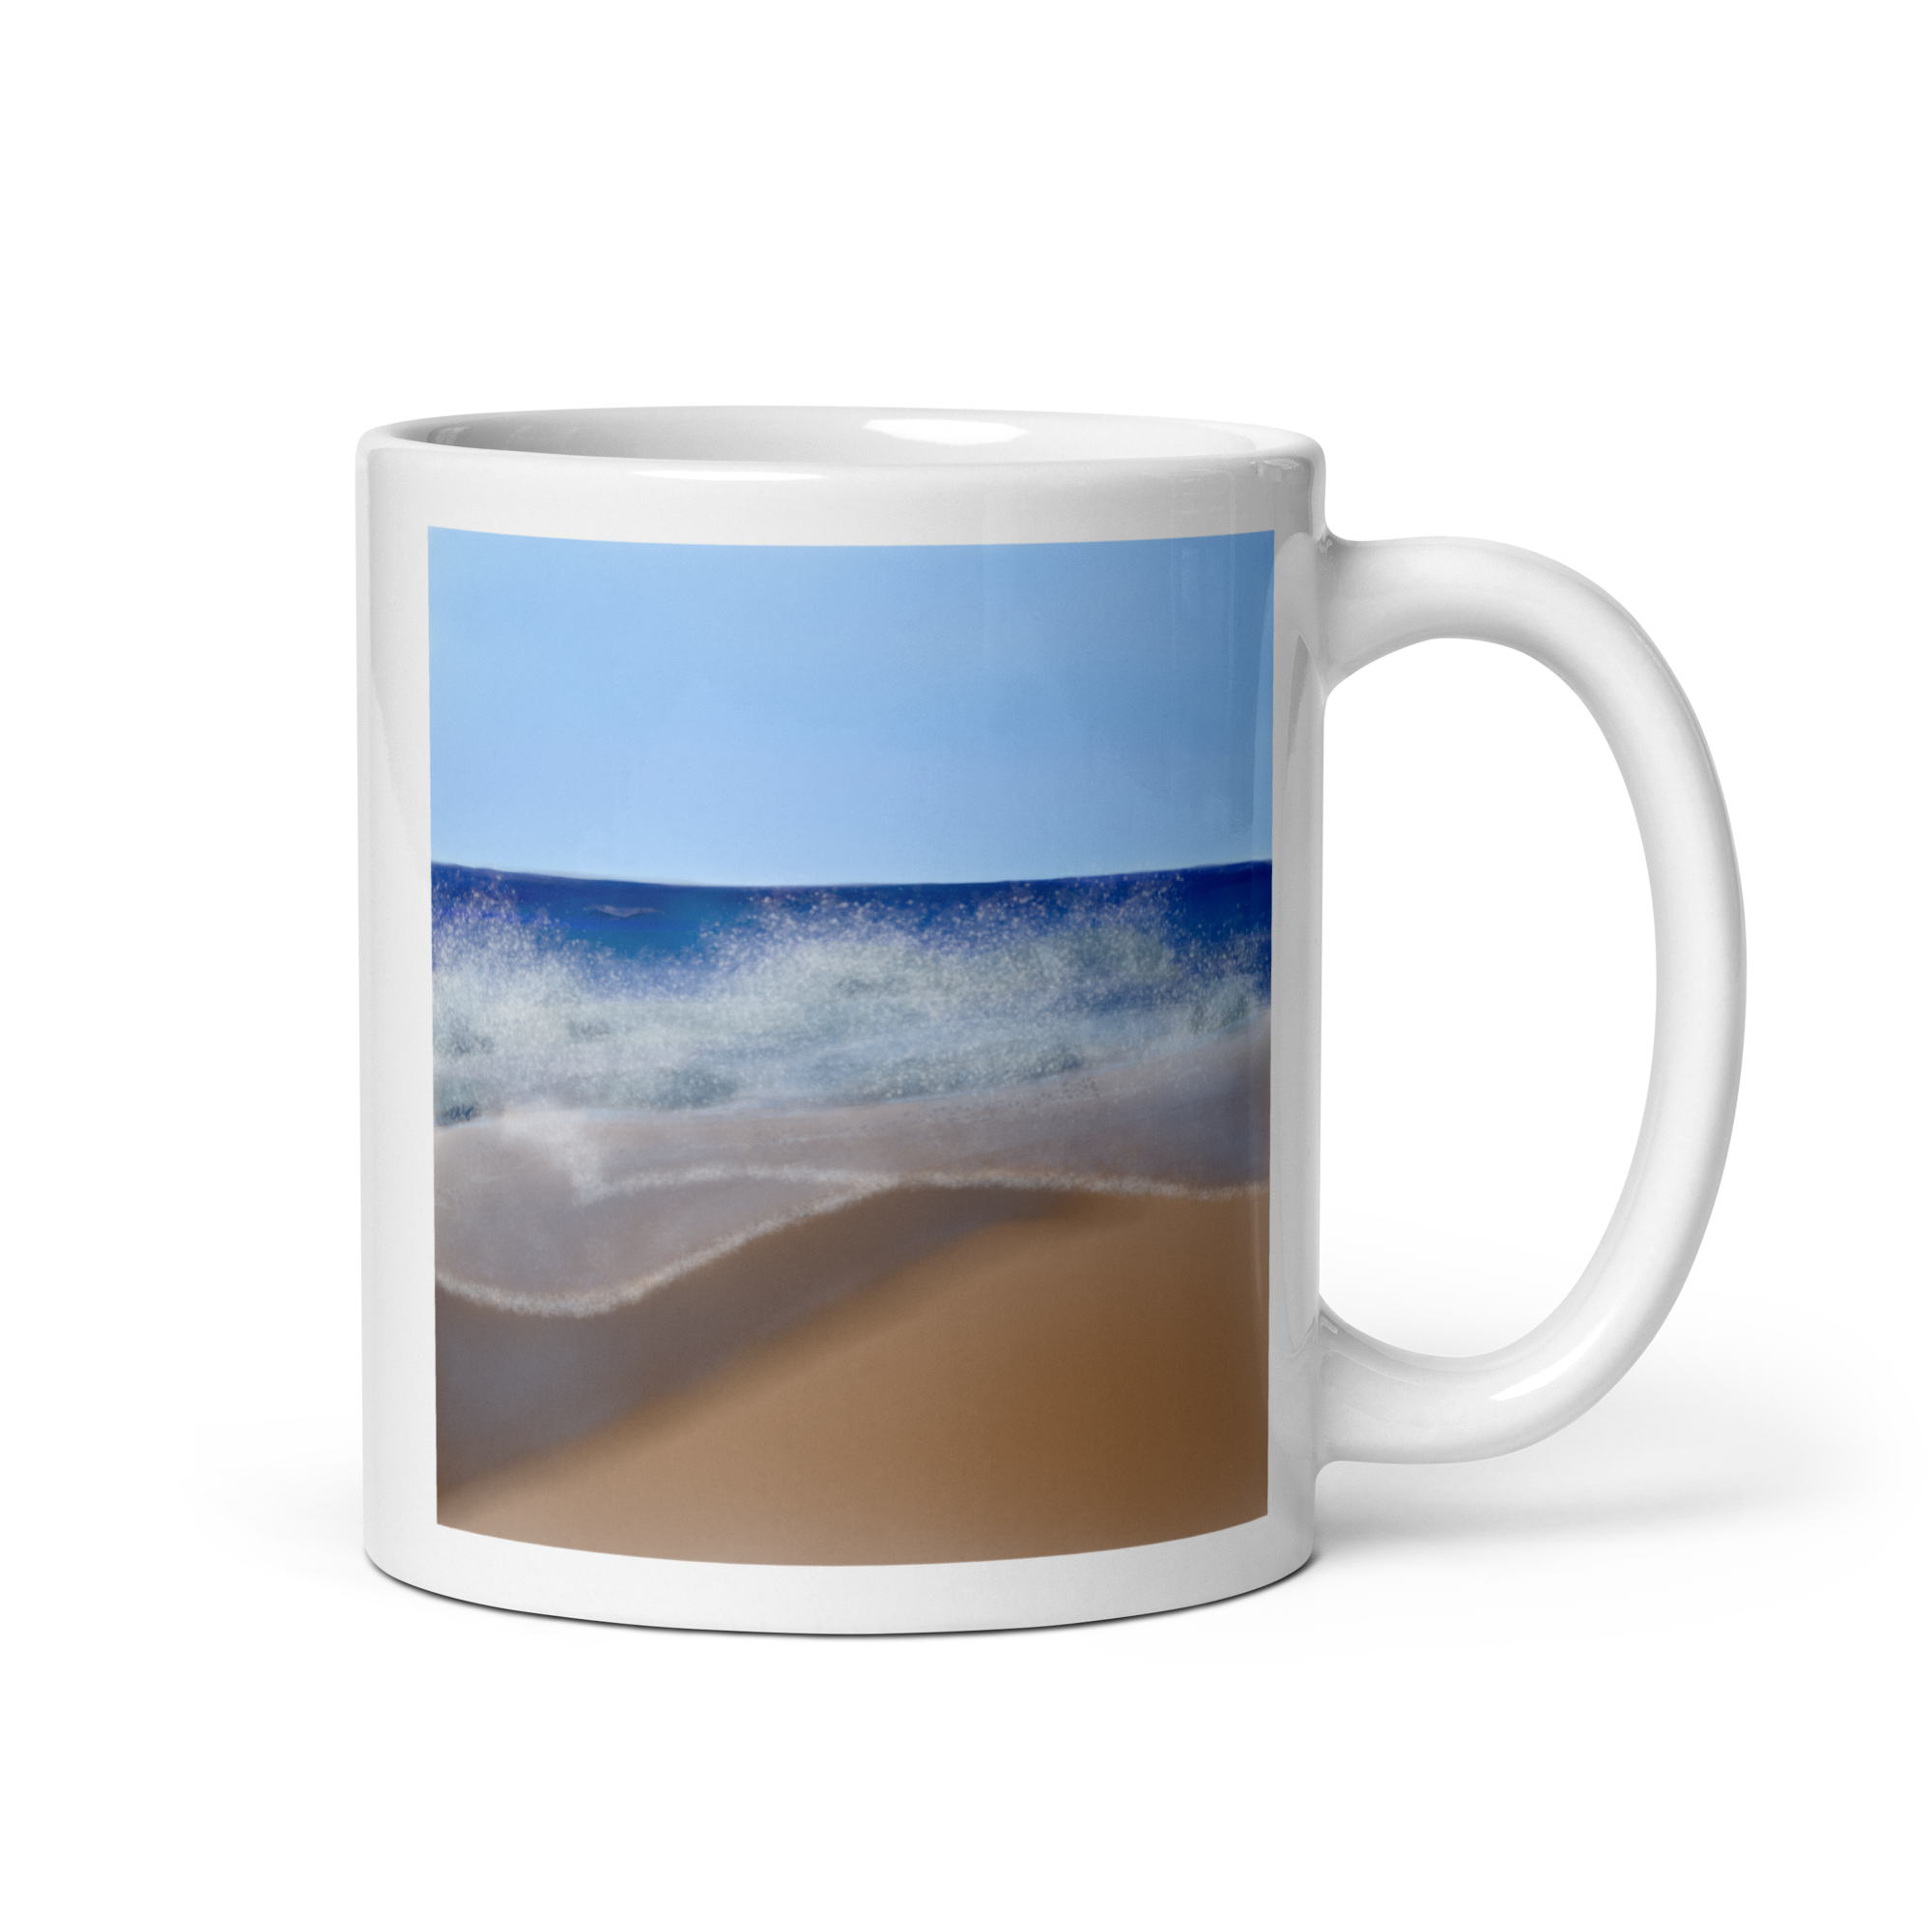 image of mug with 'Waves of Love' printed on it